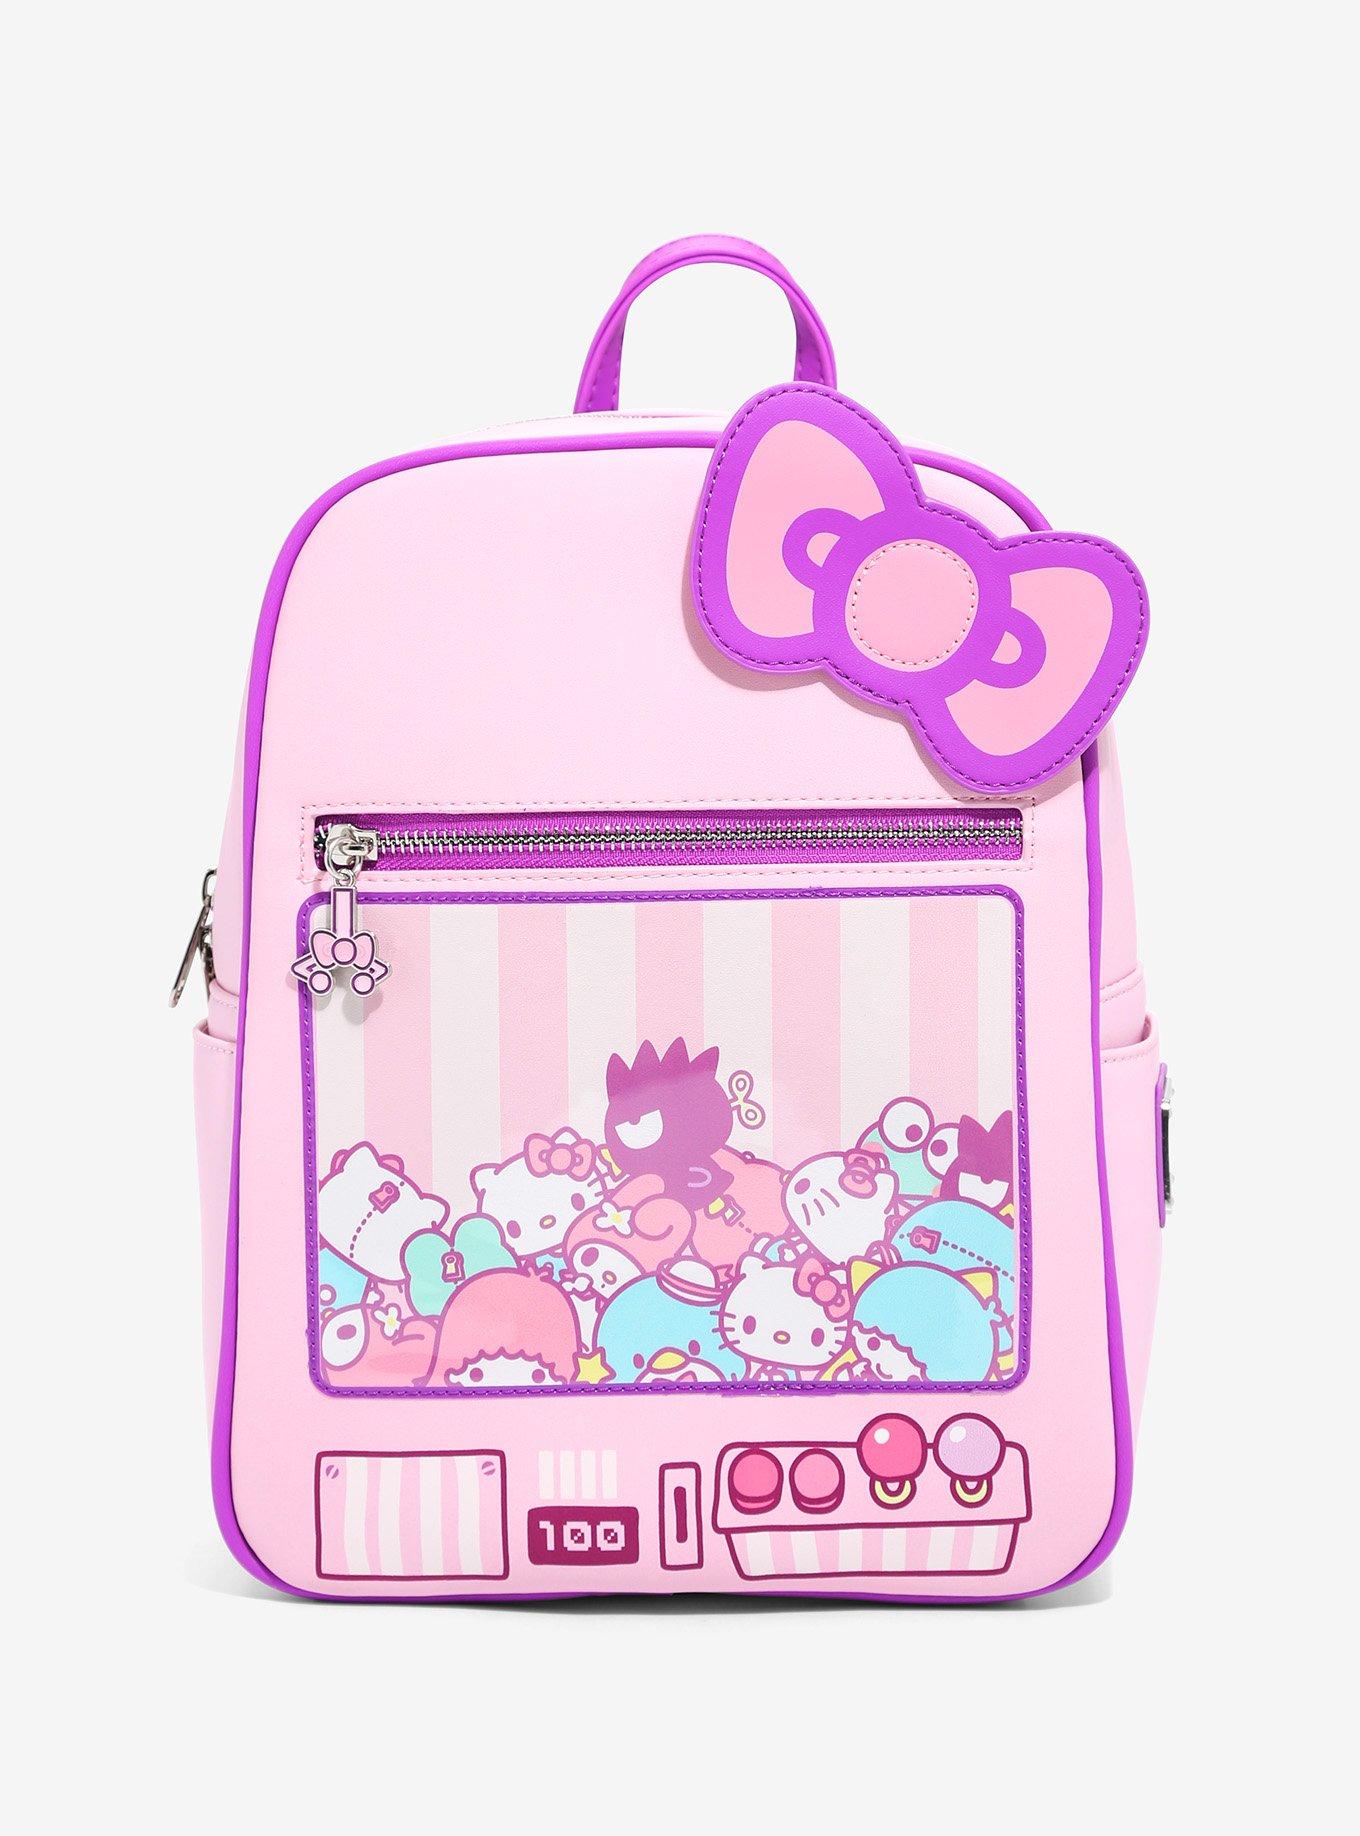 Fast Forward Hello Kitty Allover School Backpack - Hello Kitty, My Melody,  Kuromi, Keroppi - Officially Licensed Hello Kitty School Bookbag (White)